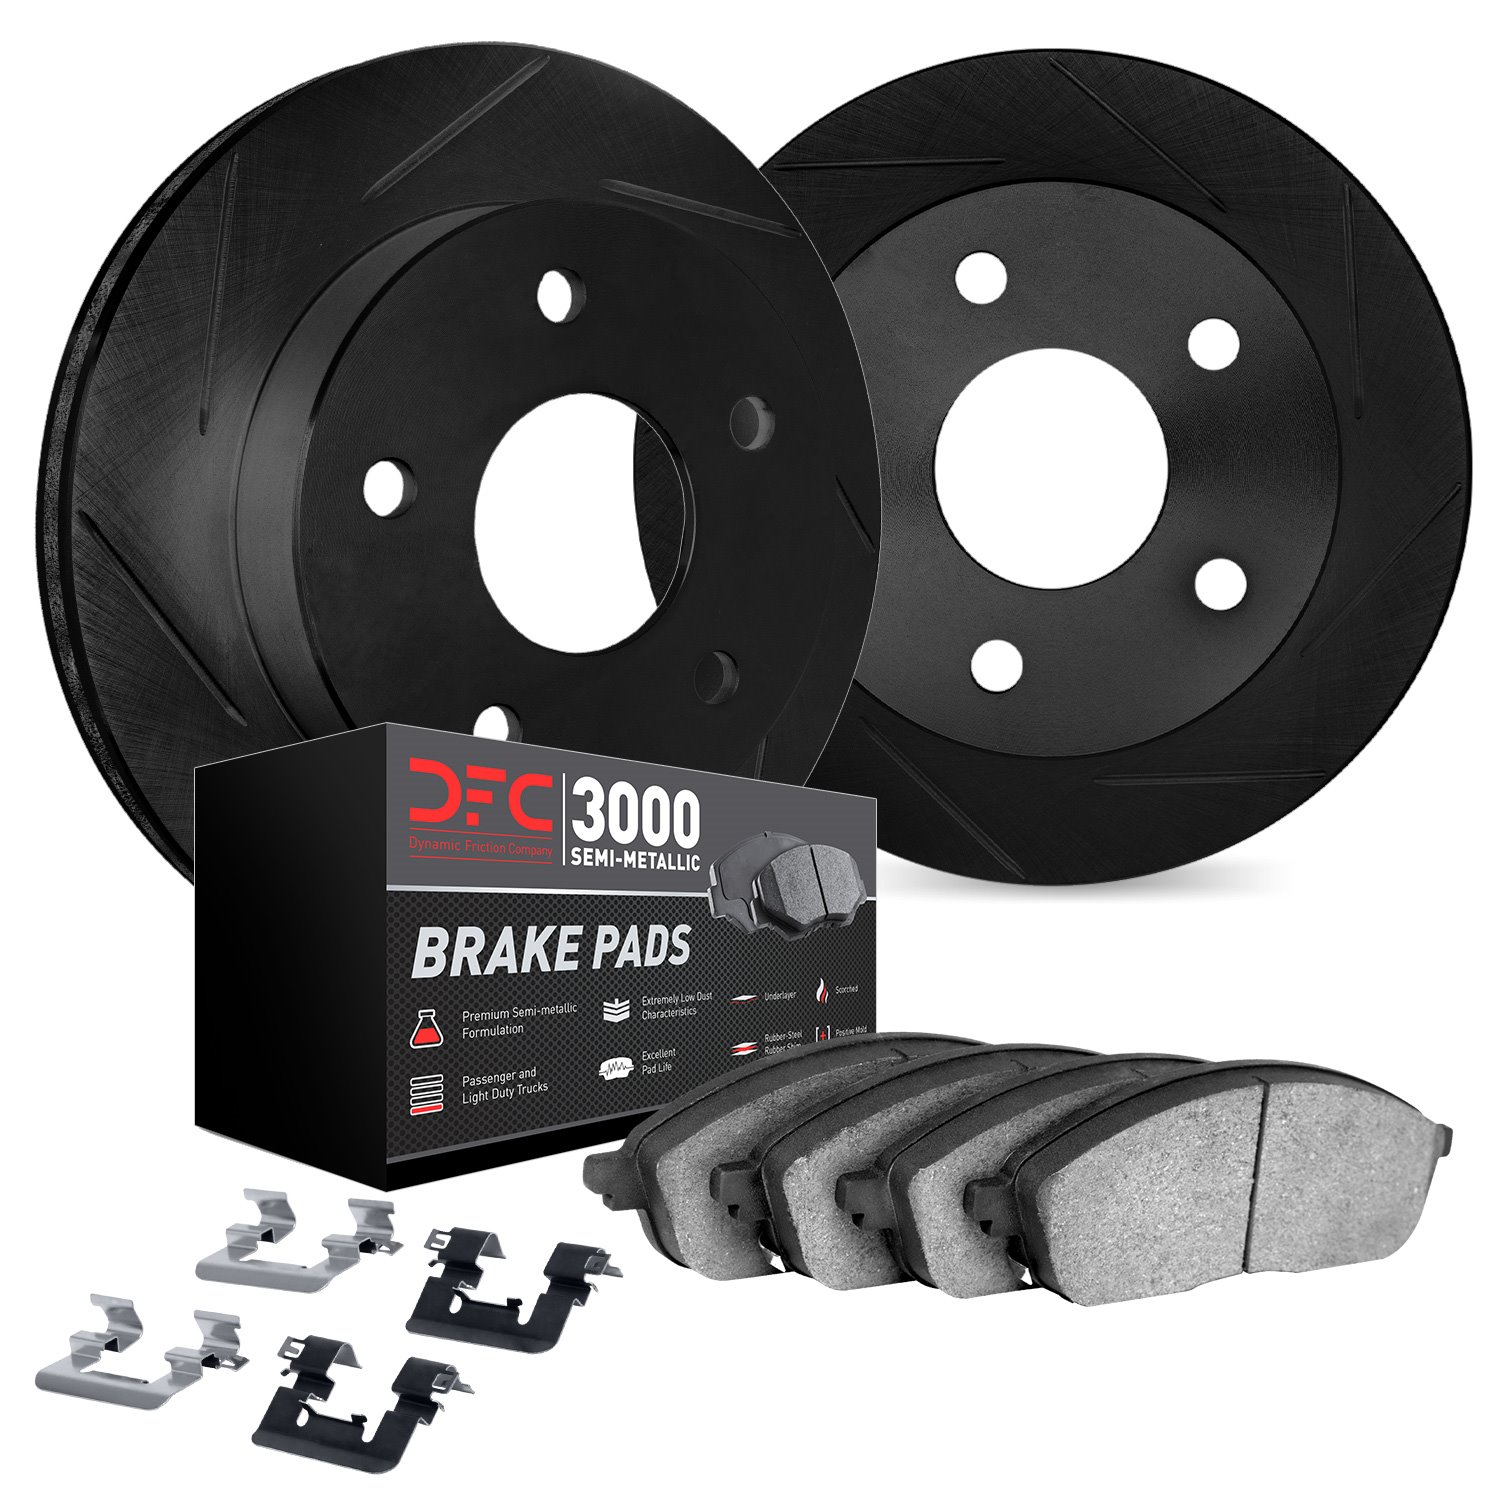 3112-58024 Slotted Brake Rotors with 3000-Series Semi-Metallic Brake Pads Kit & Hardware [Black], Fits Select Acura/Honda, Posit